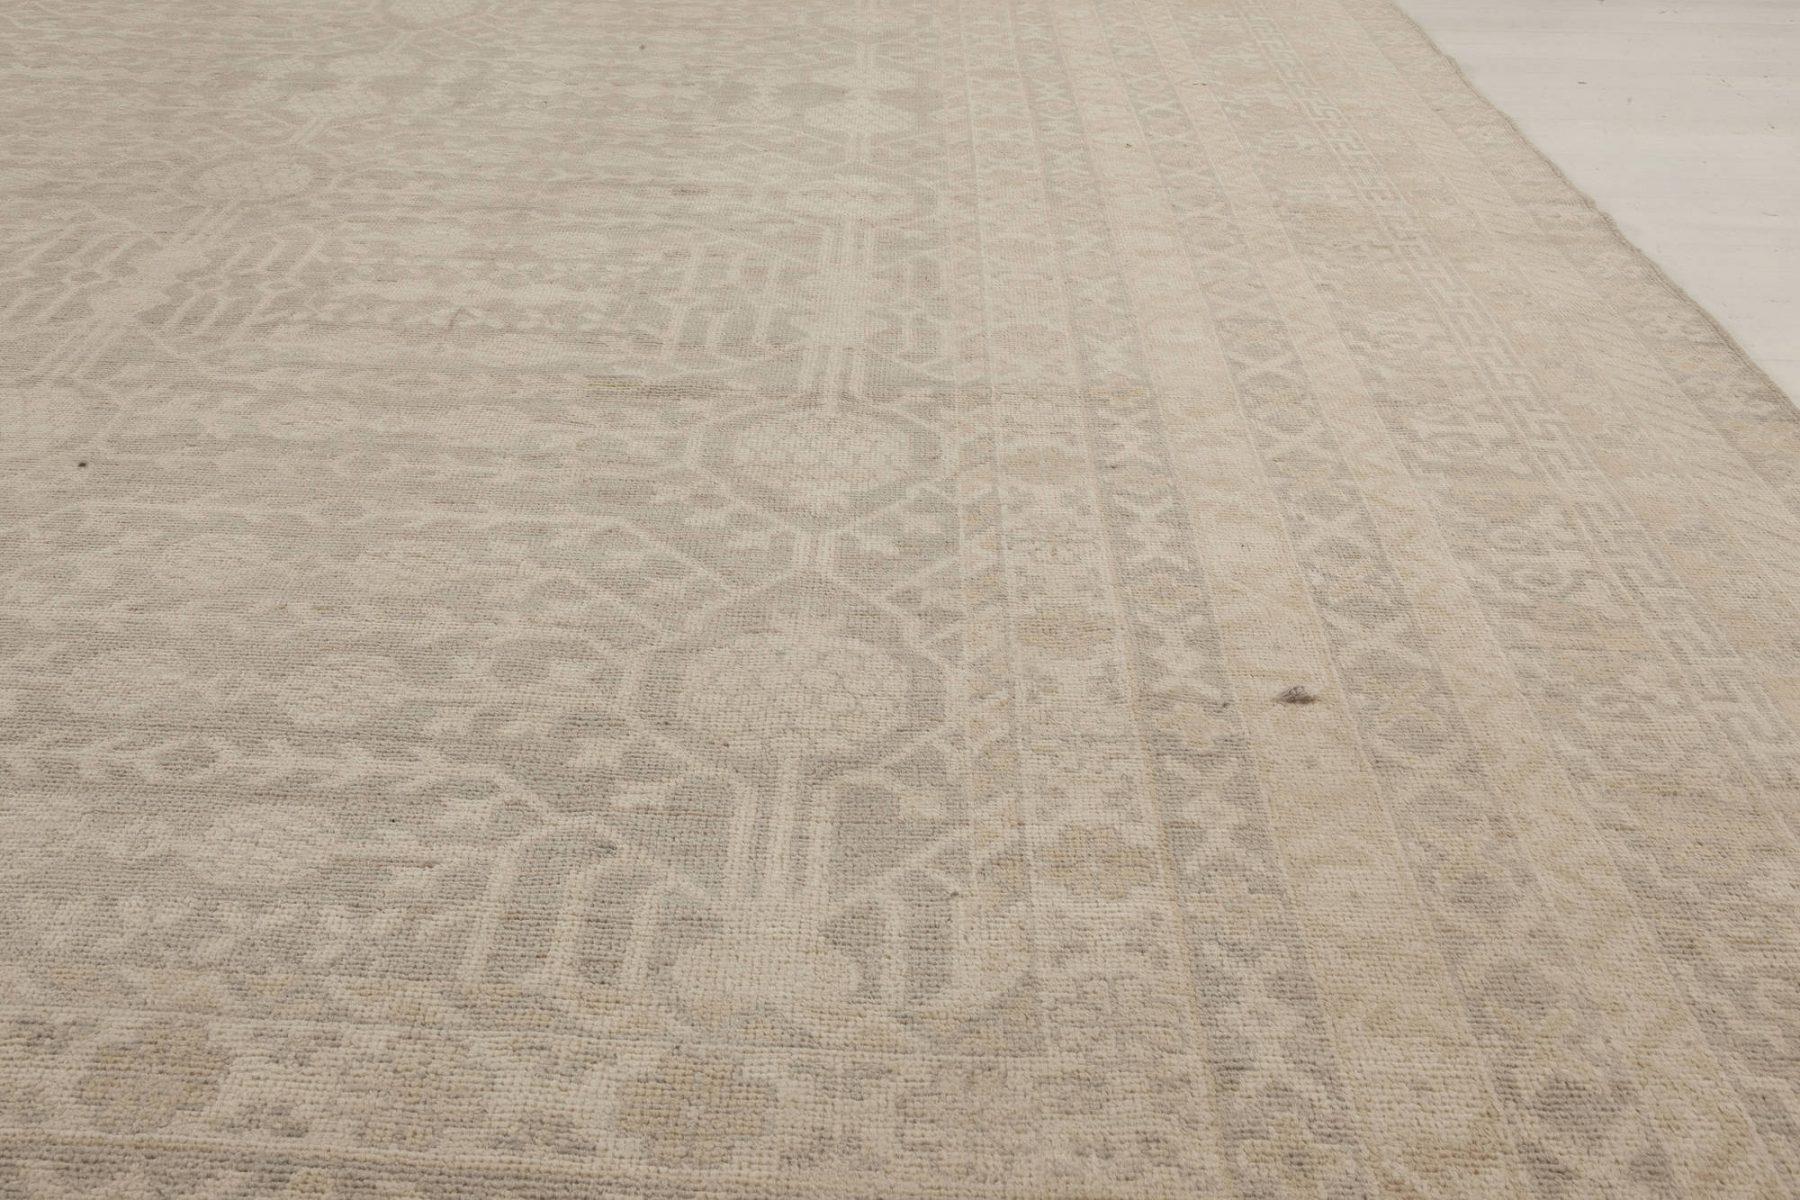 Contemporary grey and beige samarkand rug by Doris Leslie Blau.
Size: 13'0